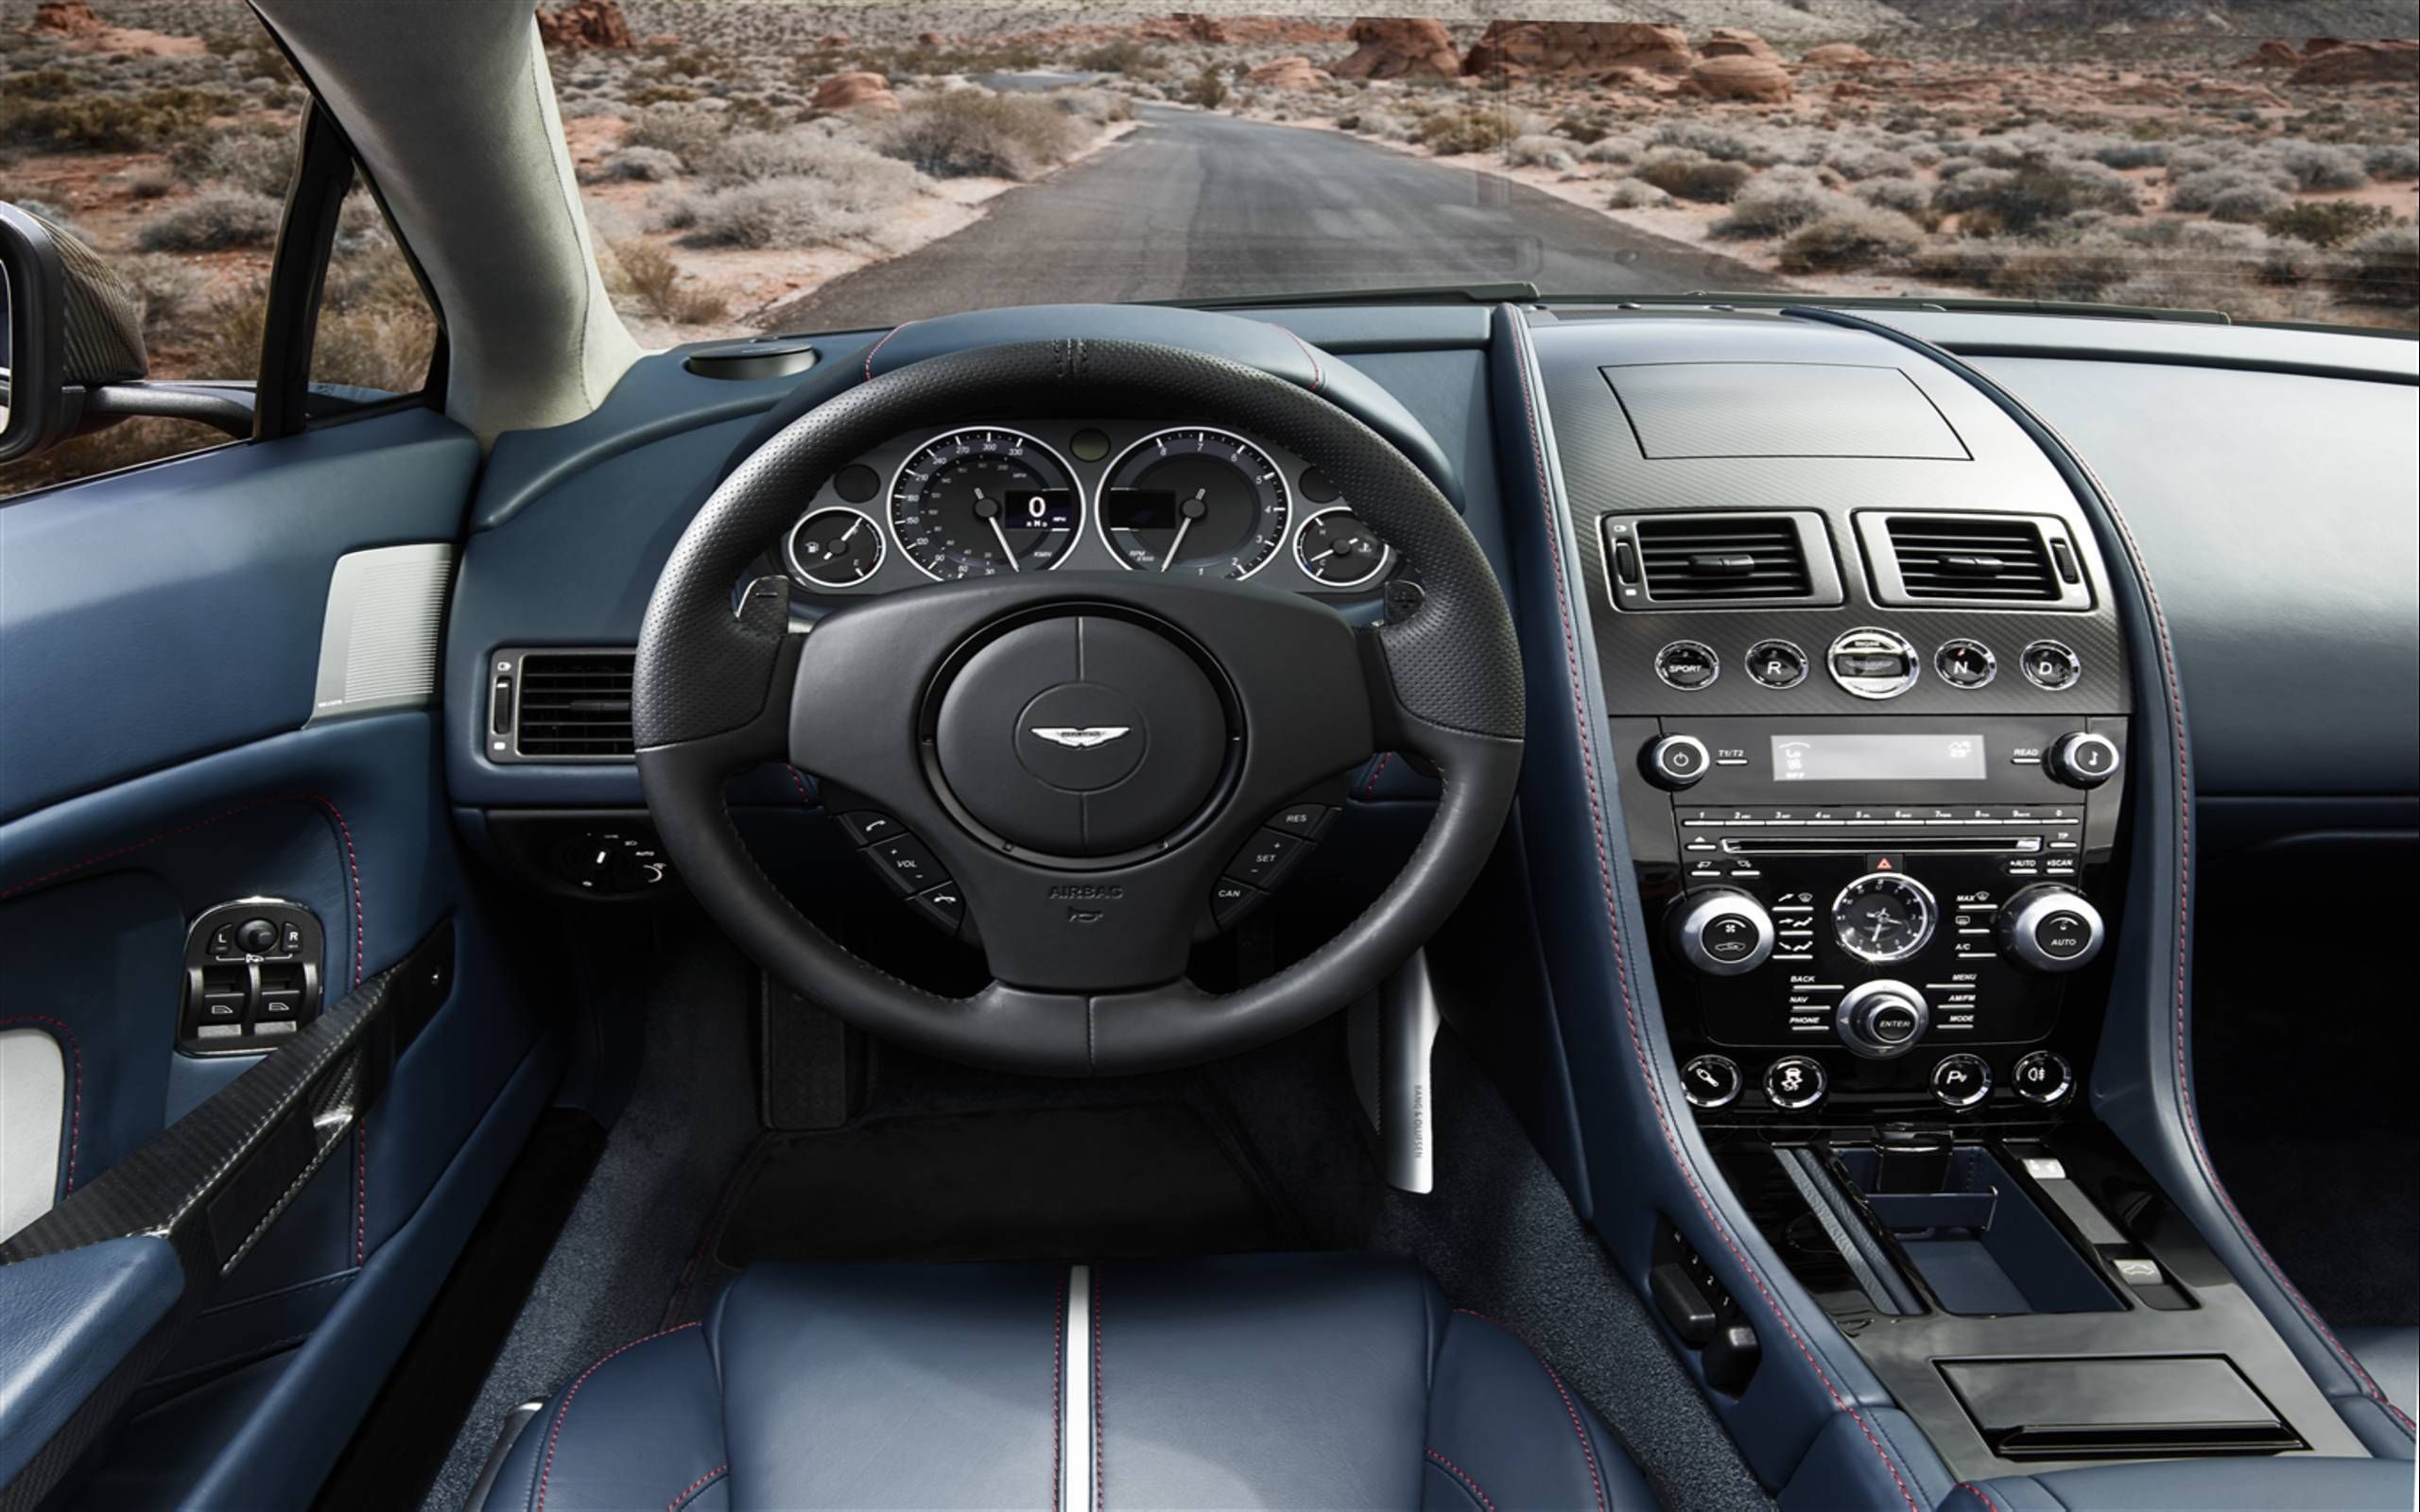 The Aston Martin V12 Vantage S Roadster cockpit